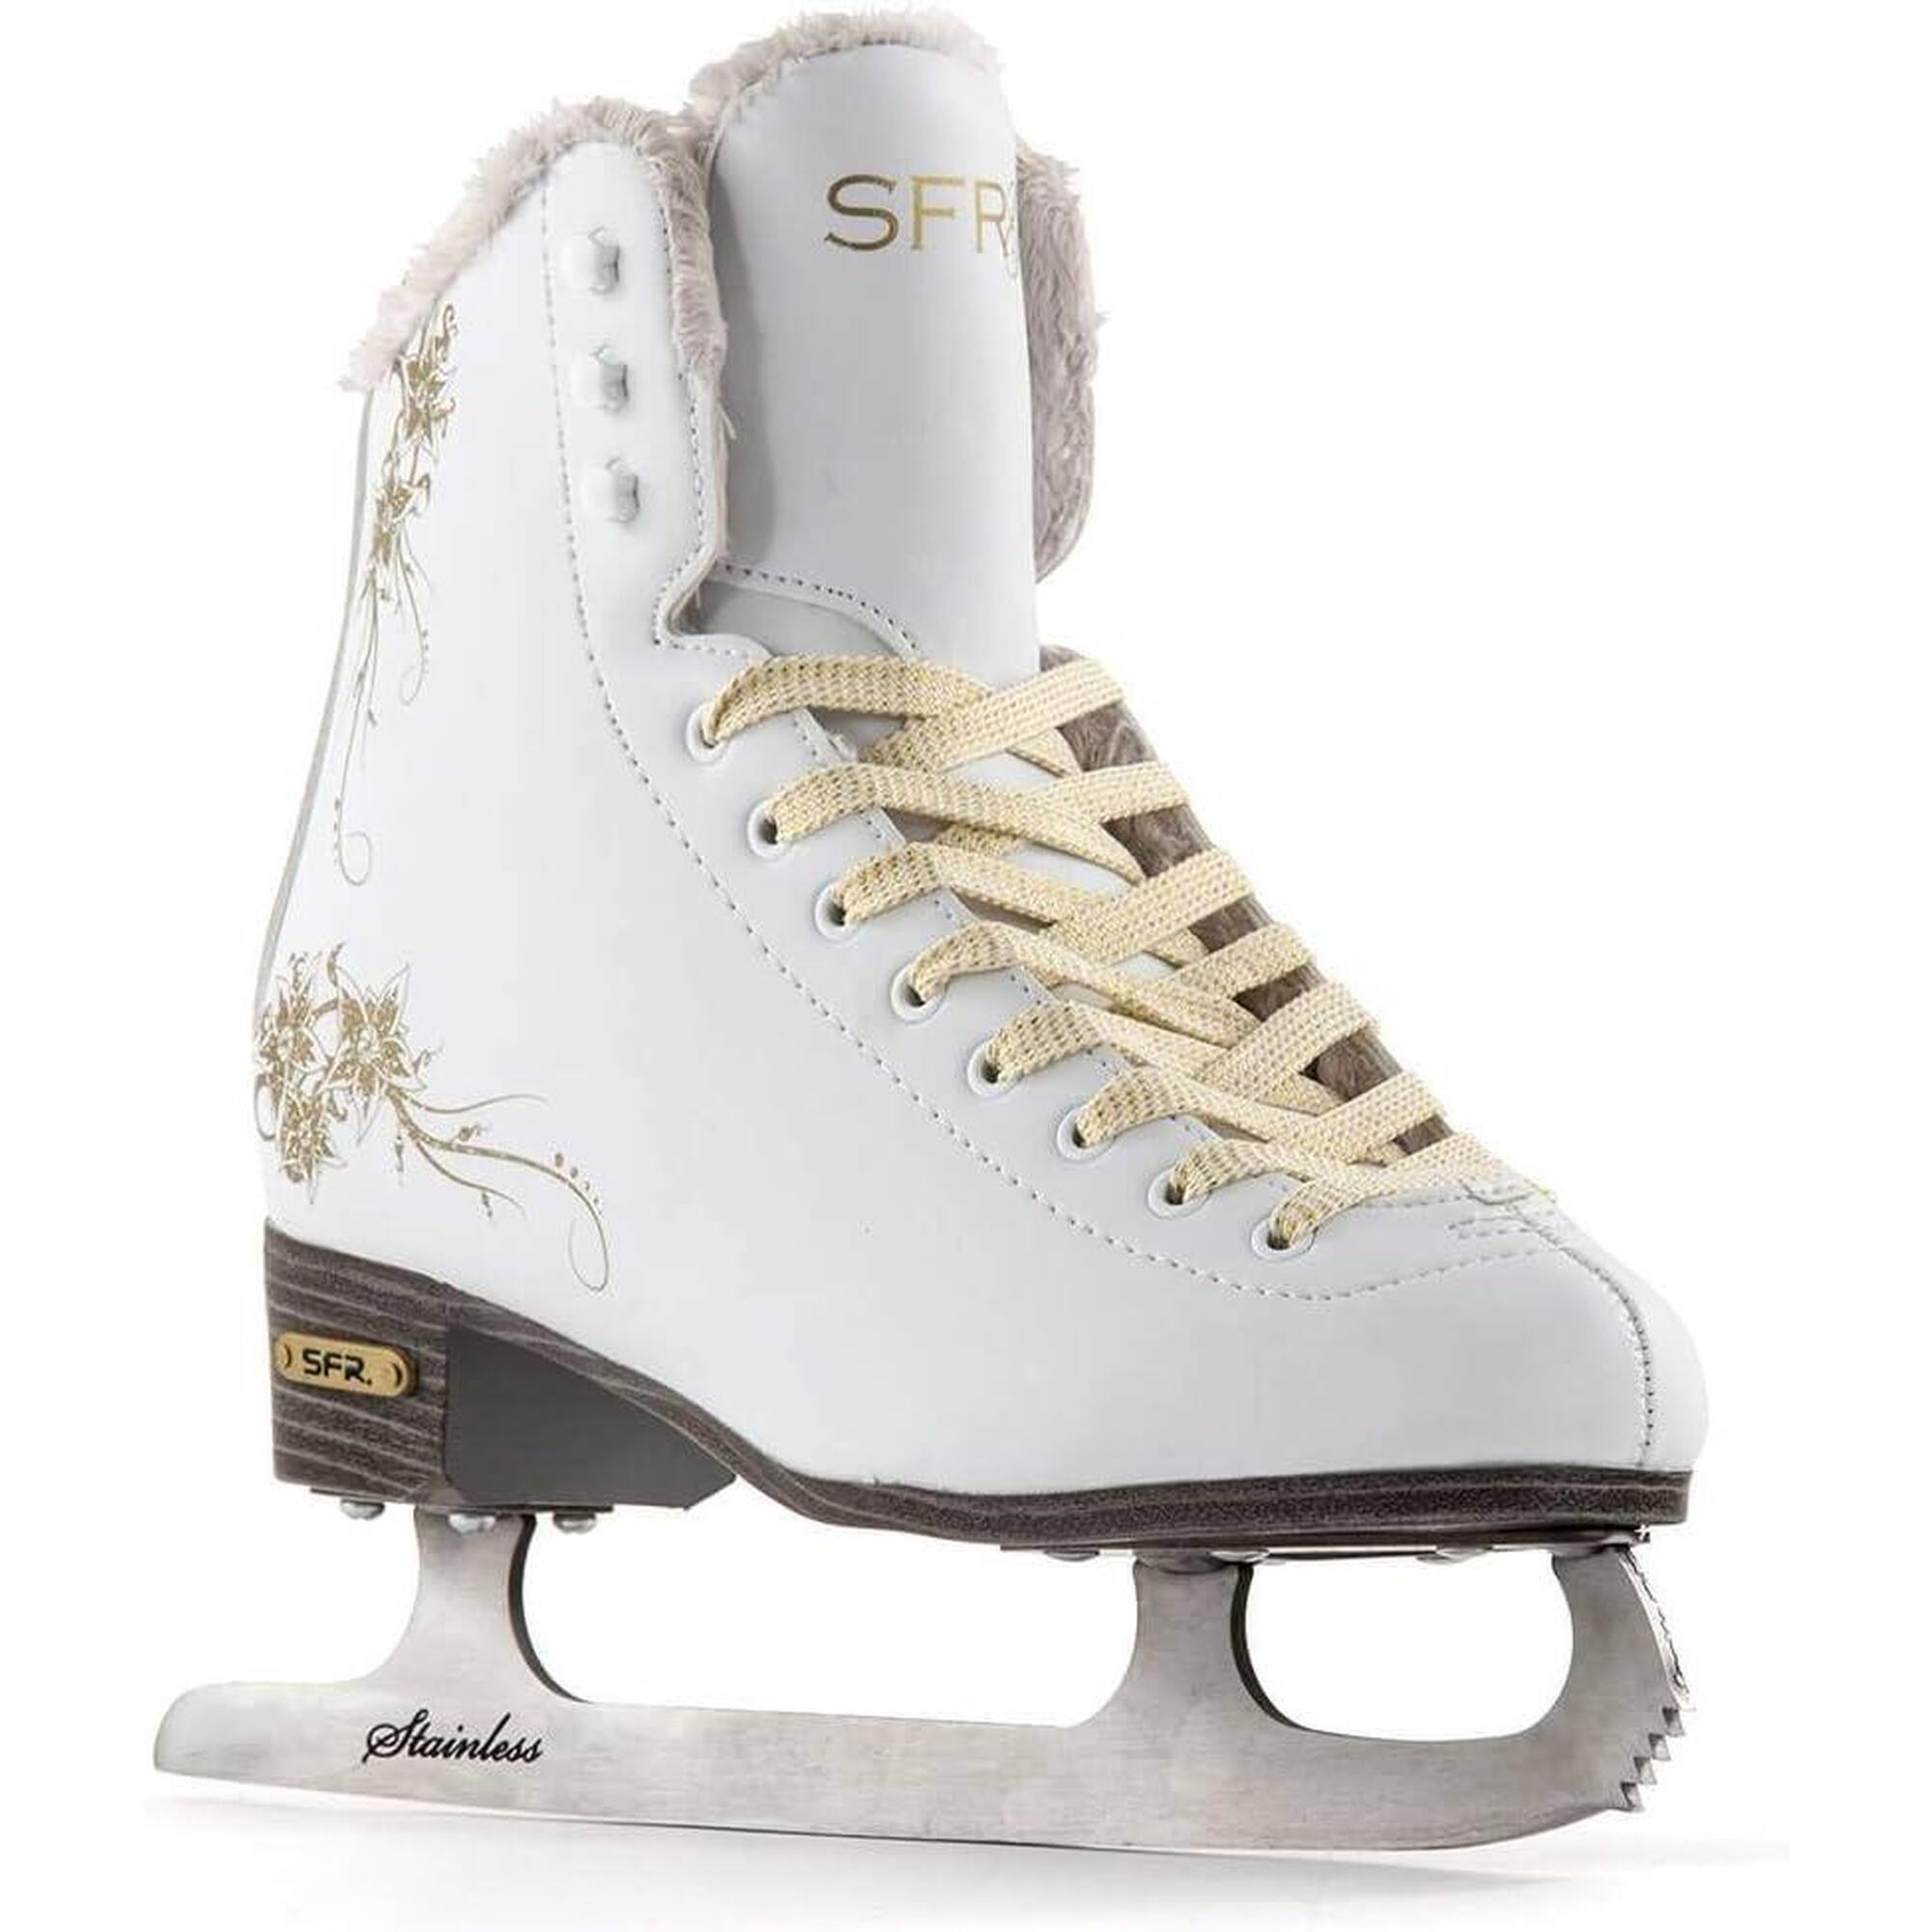 SFR Glitra White Ice Skates - Size: UK 6